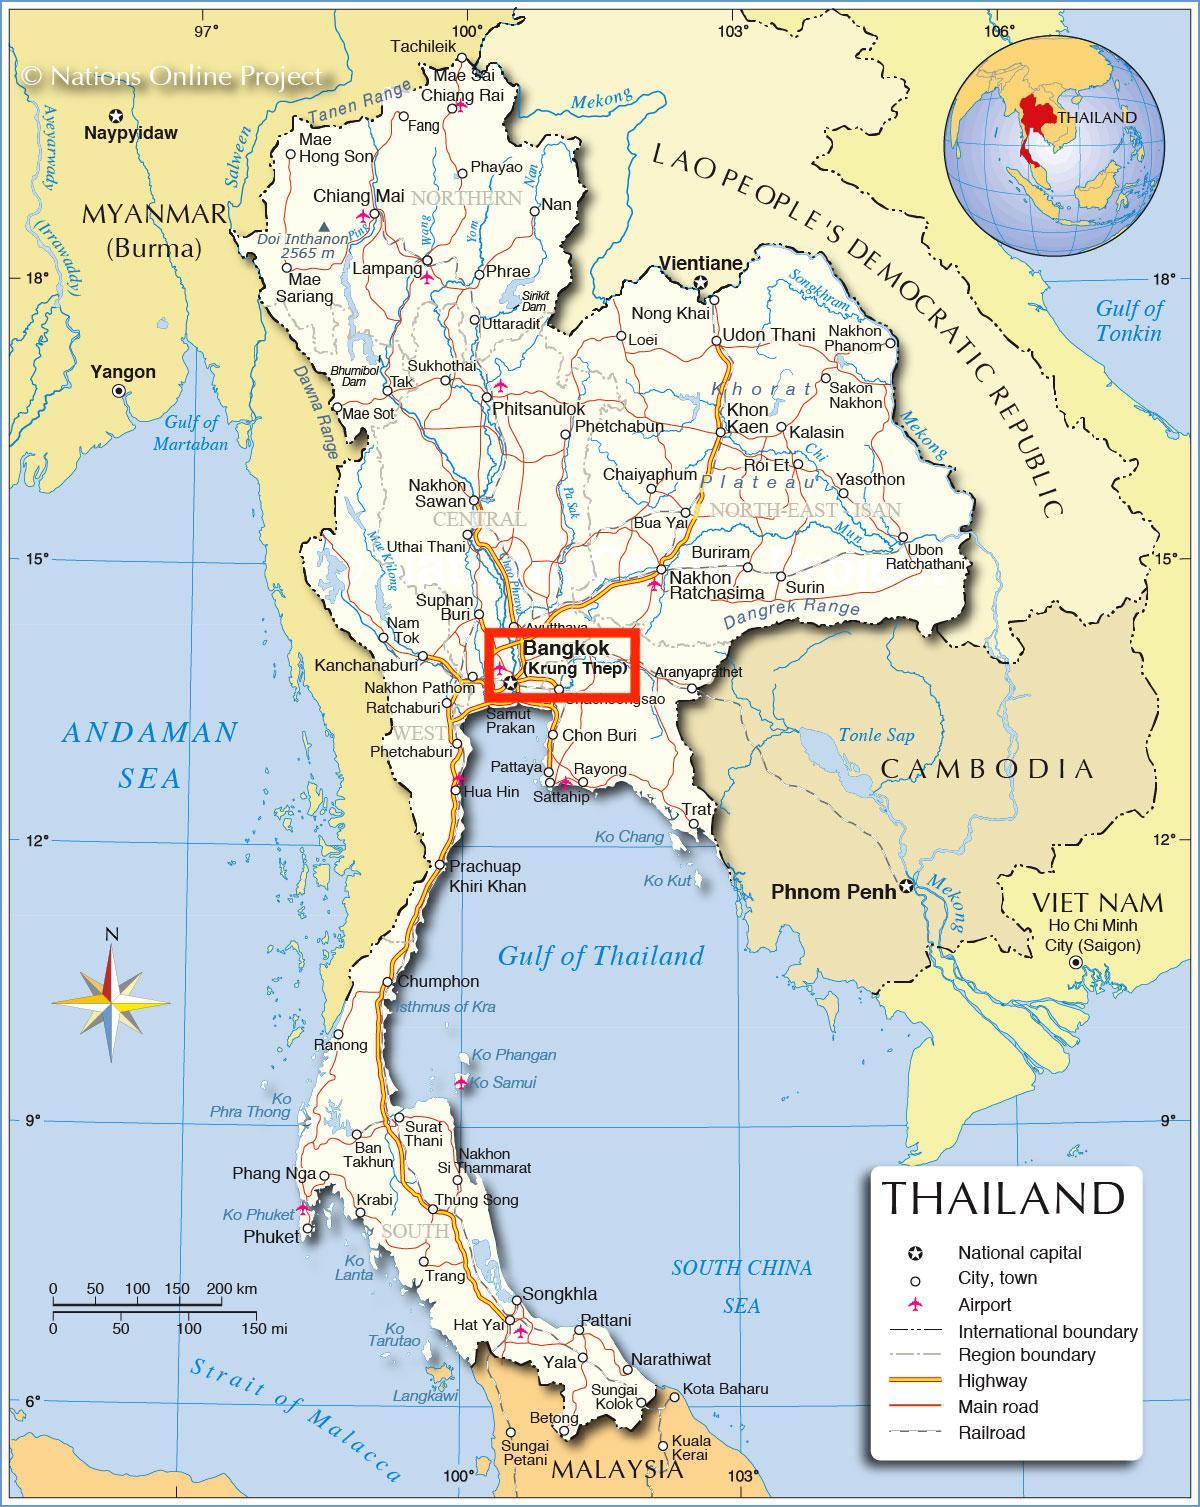 Bangkok (Krung Thep) sulla mappa della Thailandia